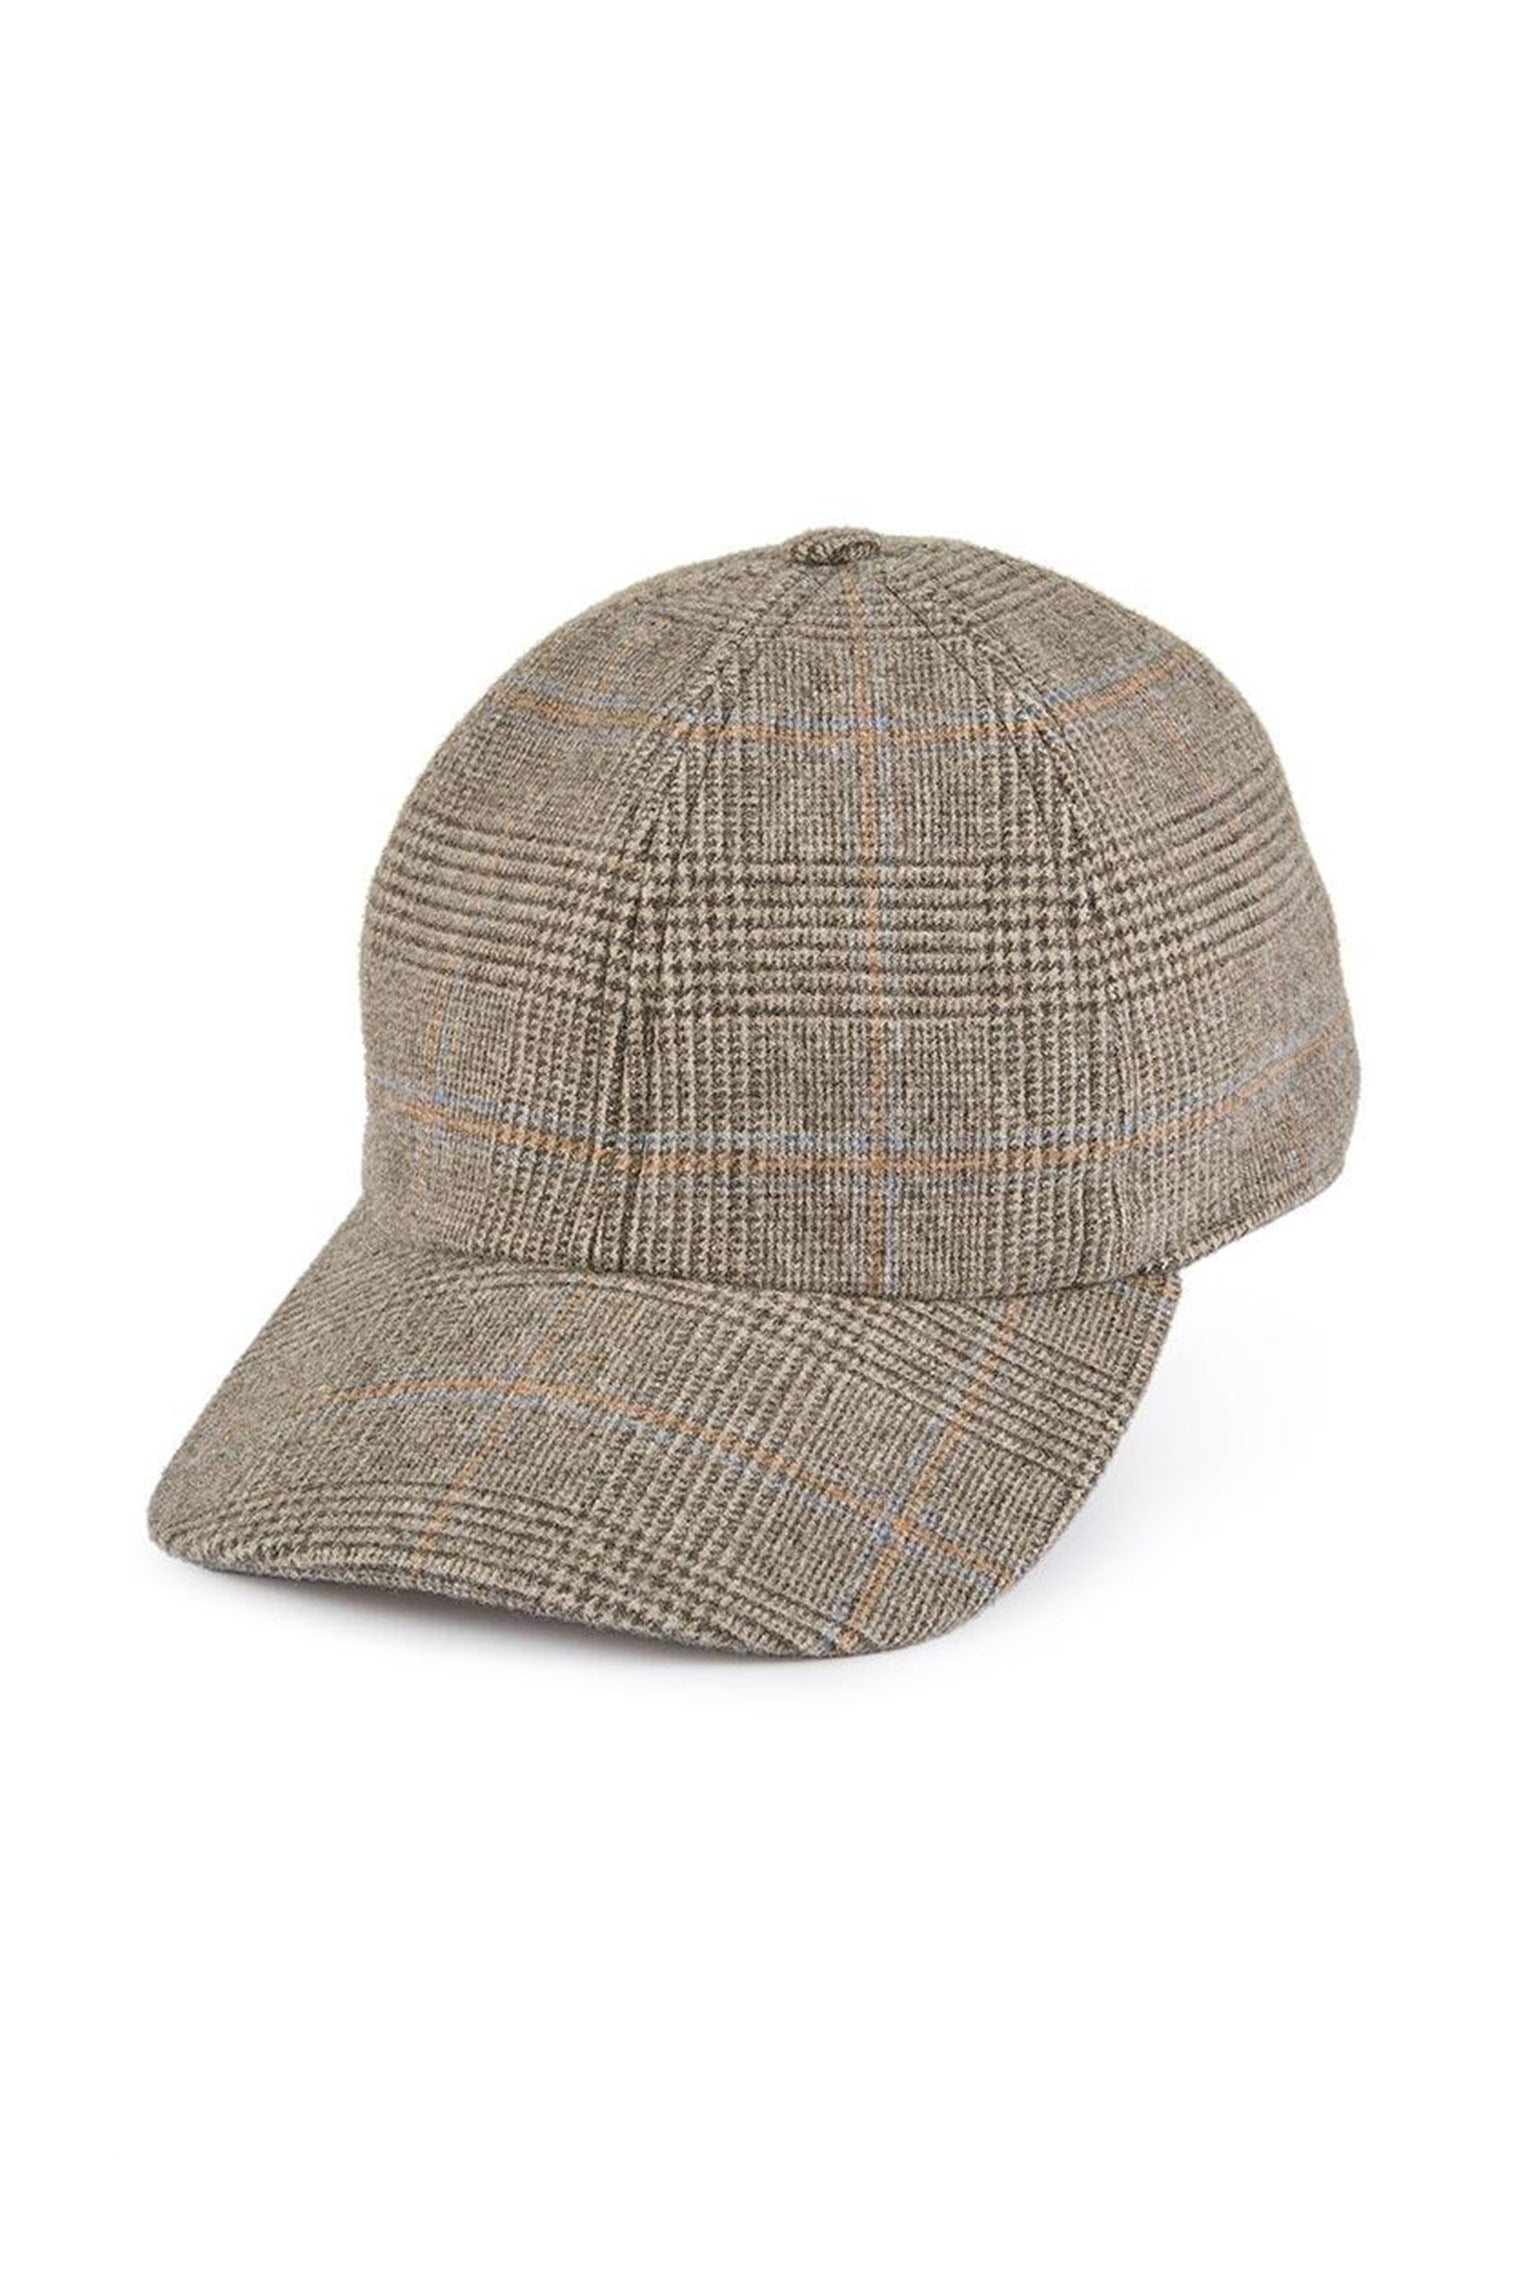 Escorial Wool Baseball Cap - Men's Hats - Lock & Co. Hatters London UK